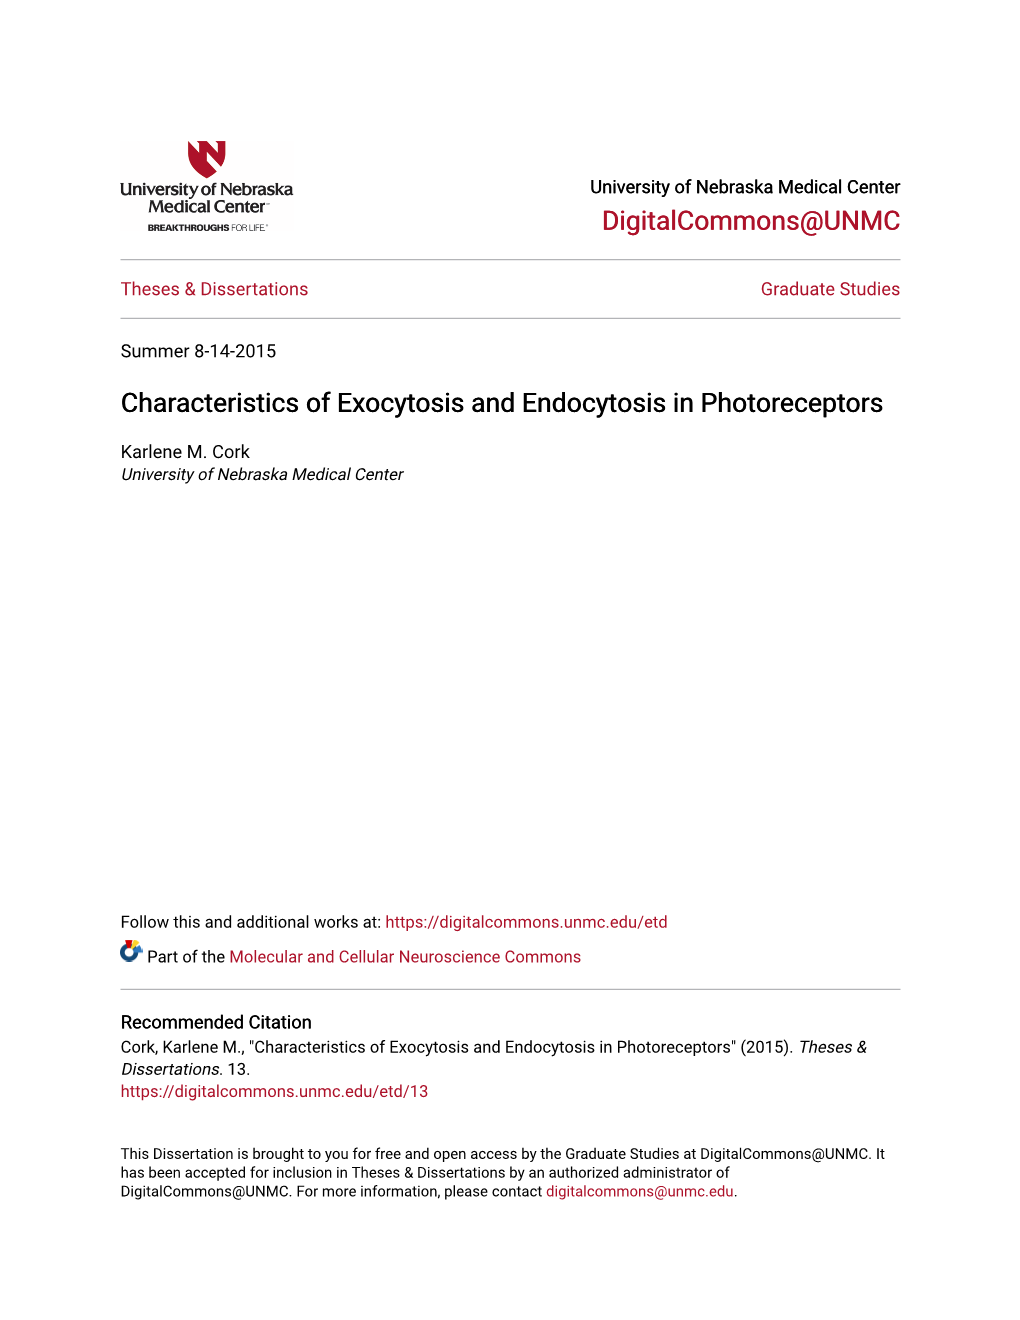 Characteristics of Exocytosis and Endocytosis in Photoreceptors